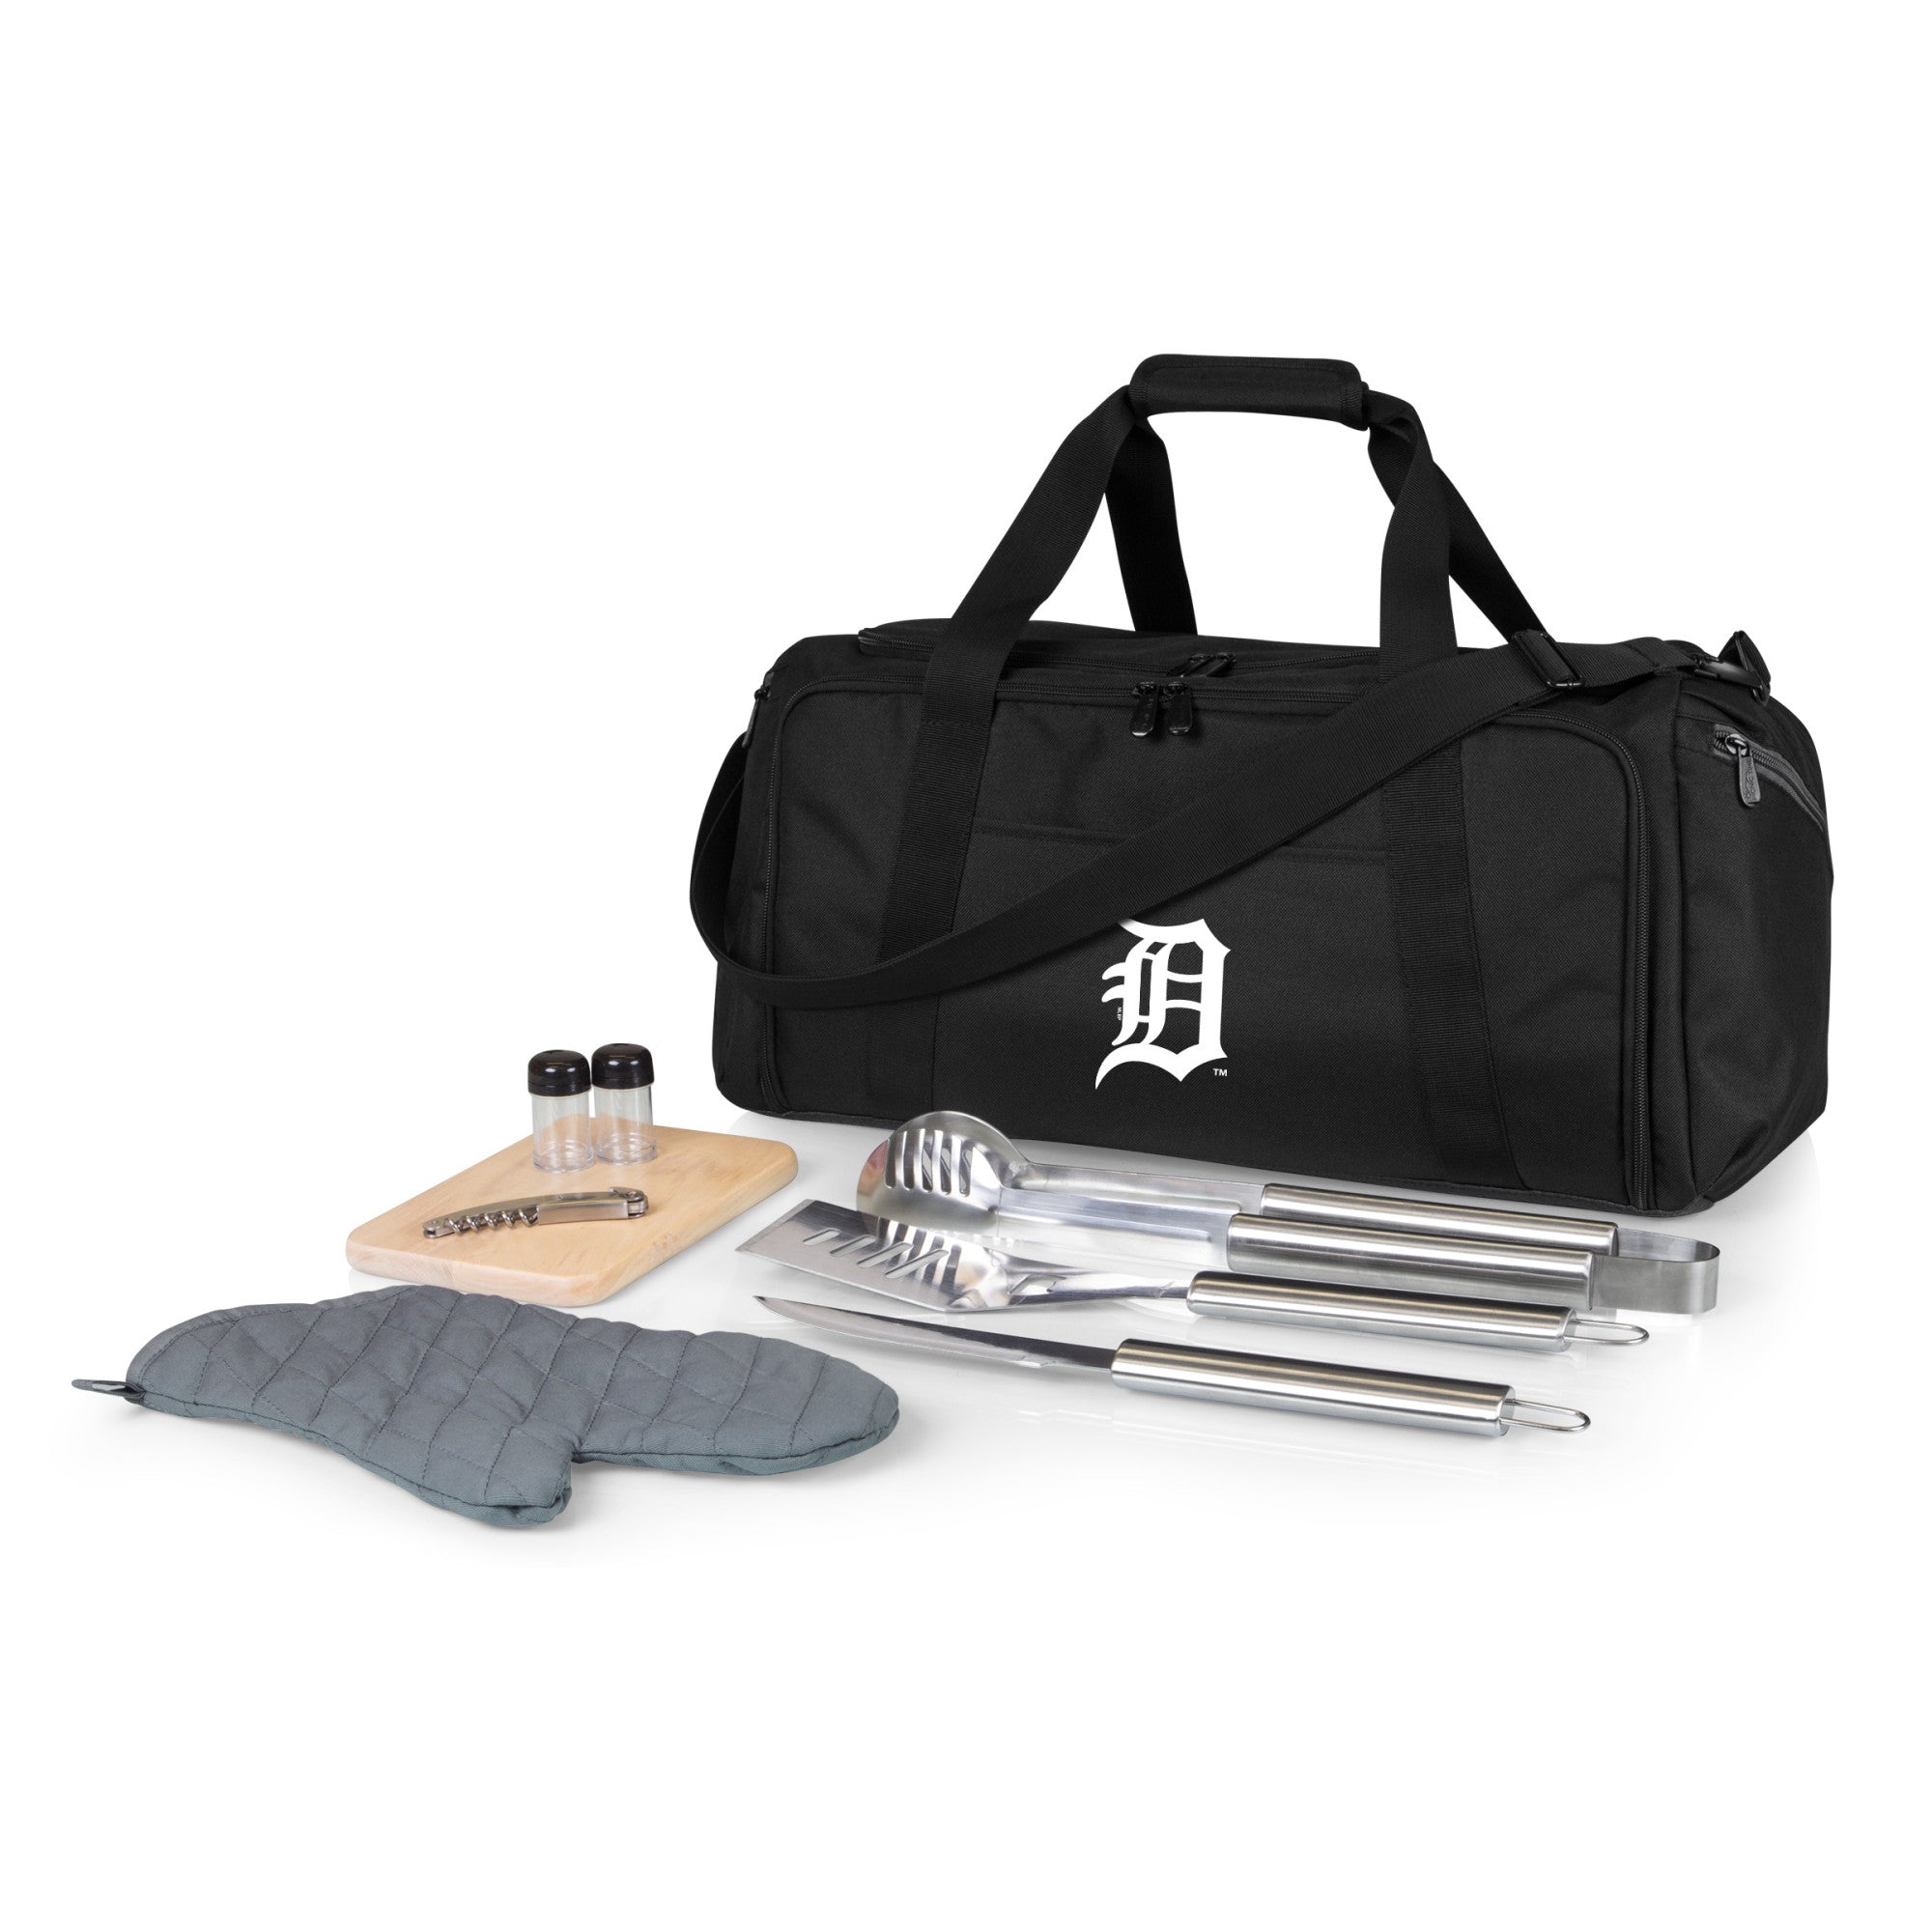 Detroit Tigers - BBQ Kit Grill Set & Cooler